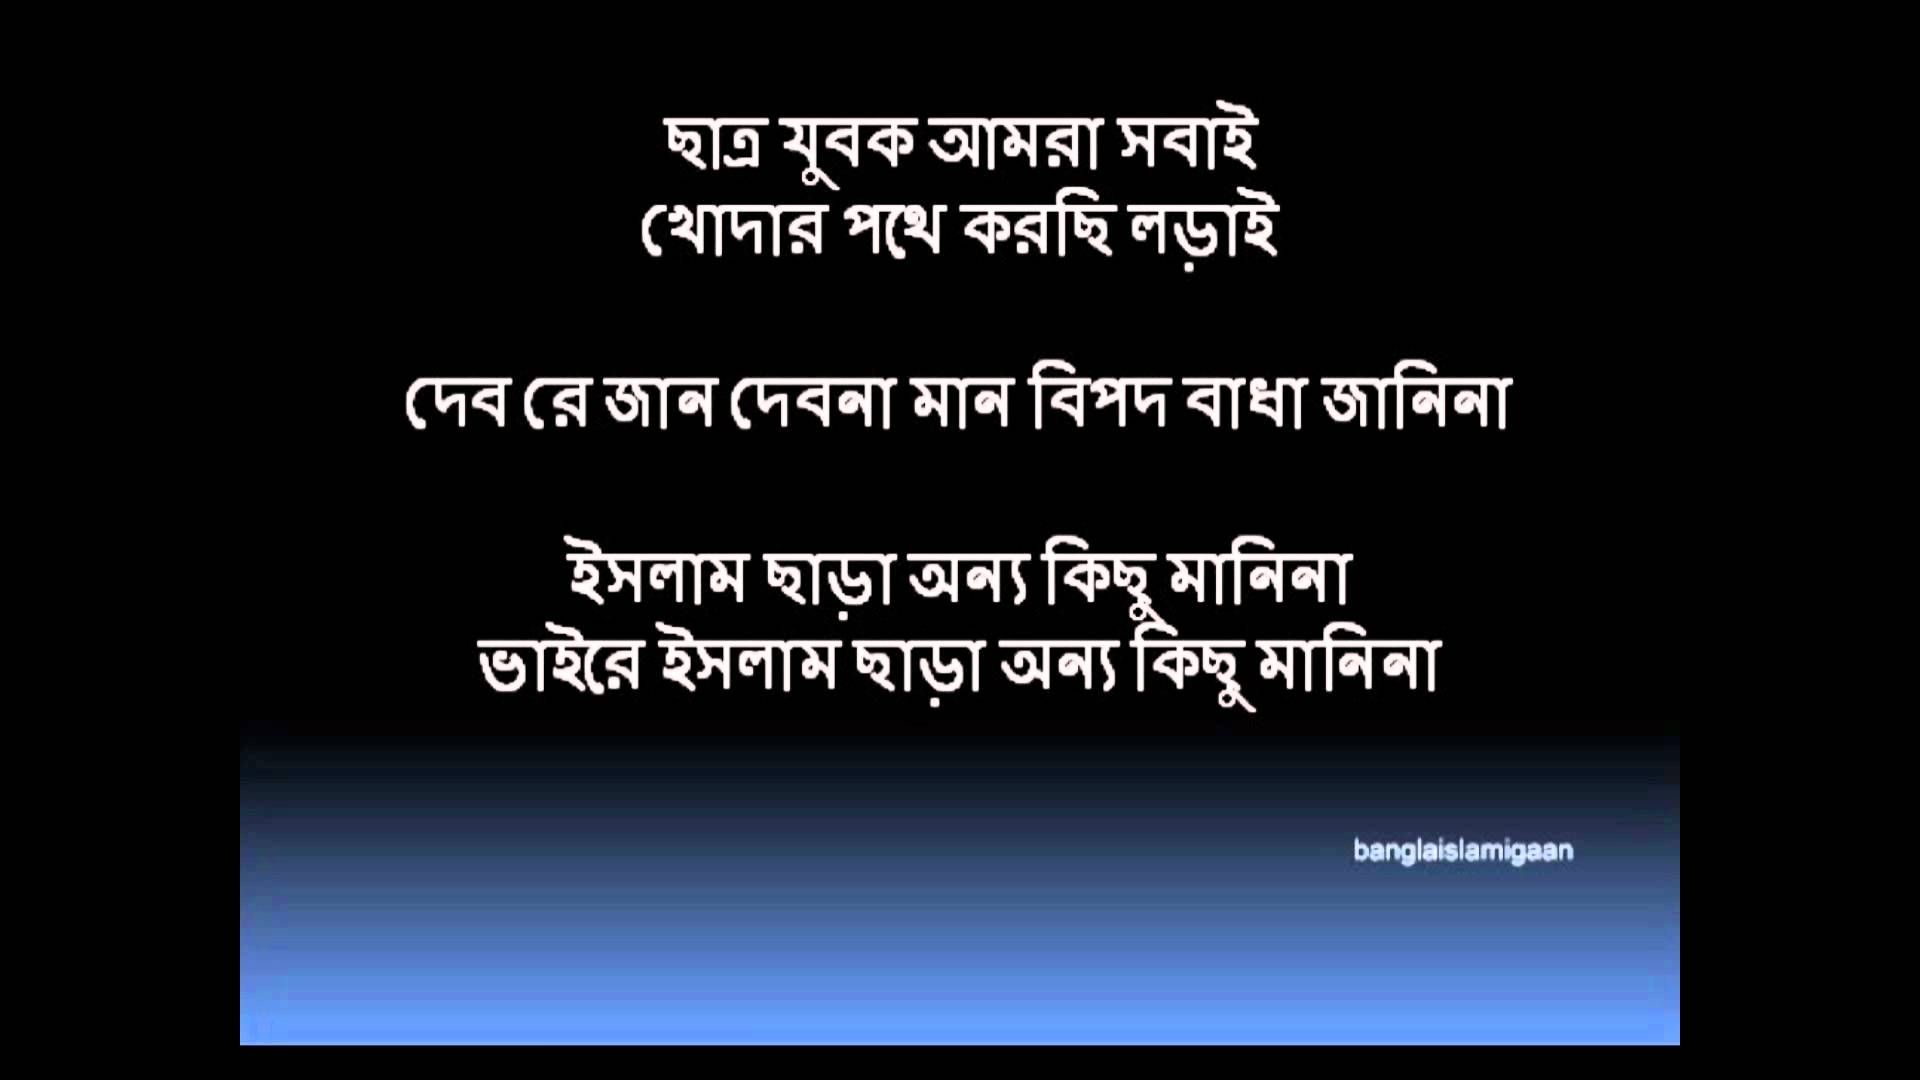 bangla islamische tapete,text,schriftart,himmel,technologie,bildschirmfoto